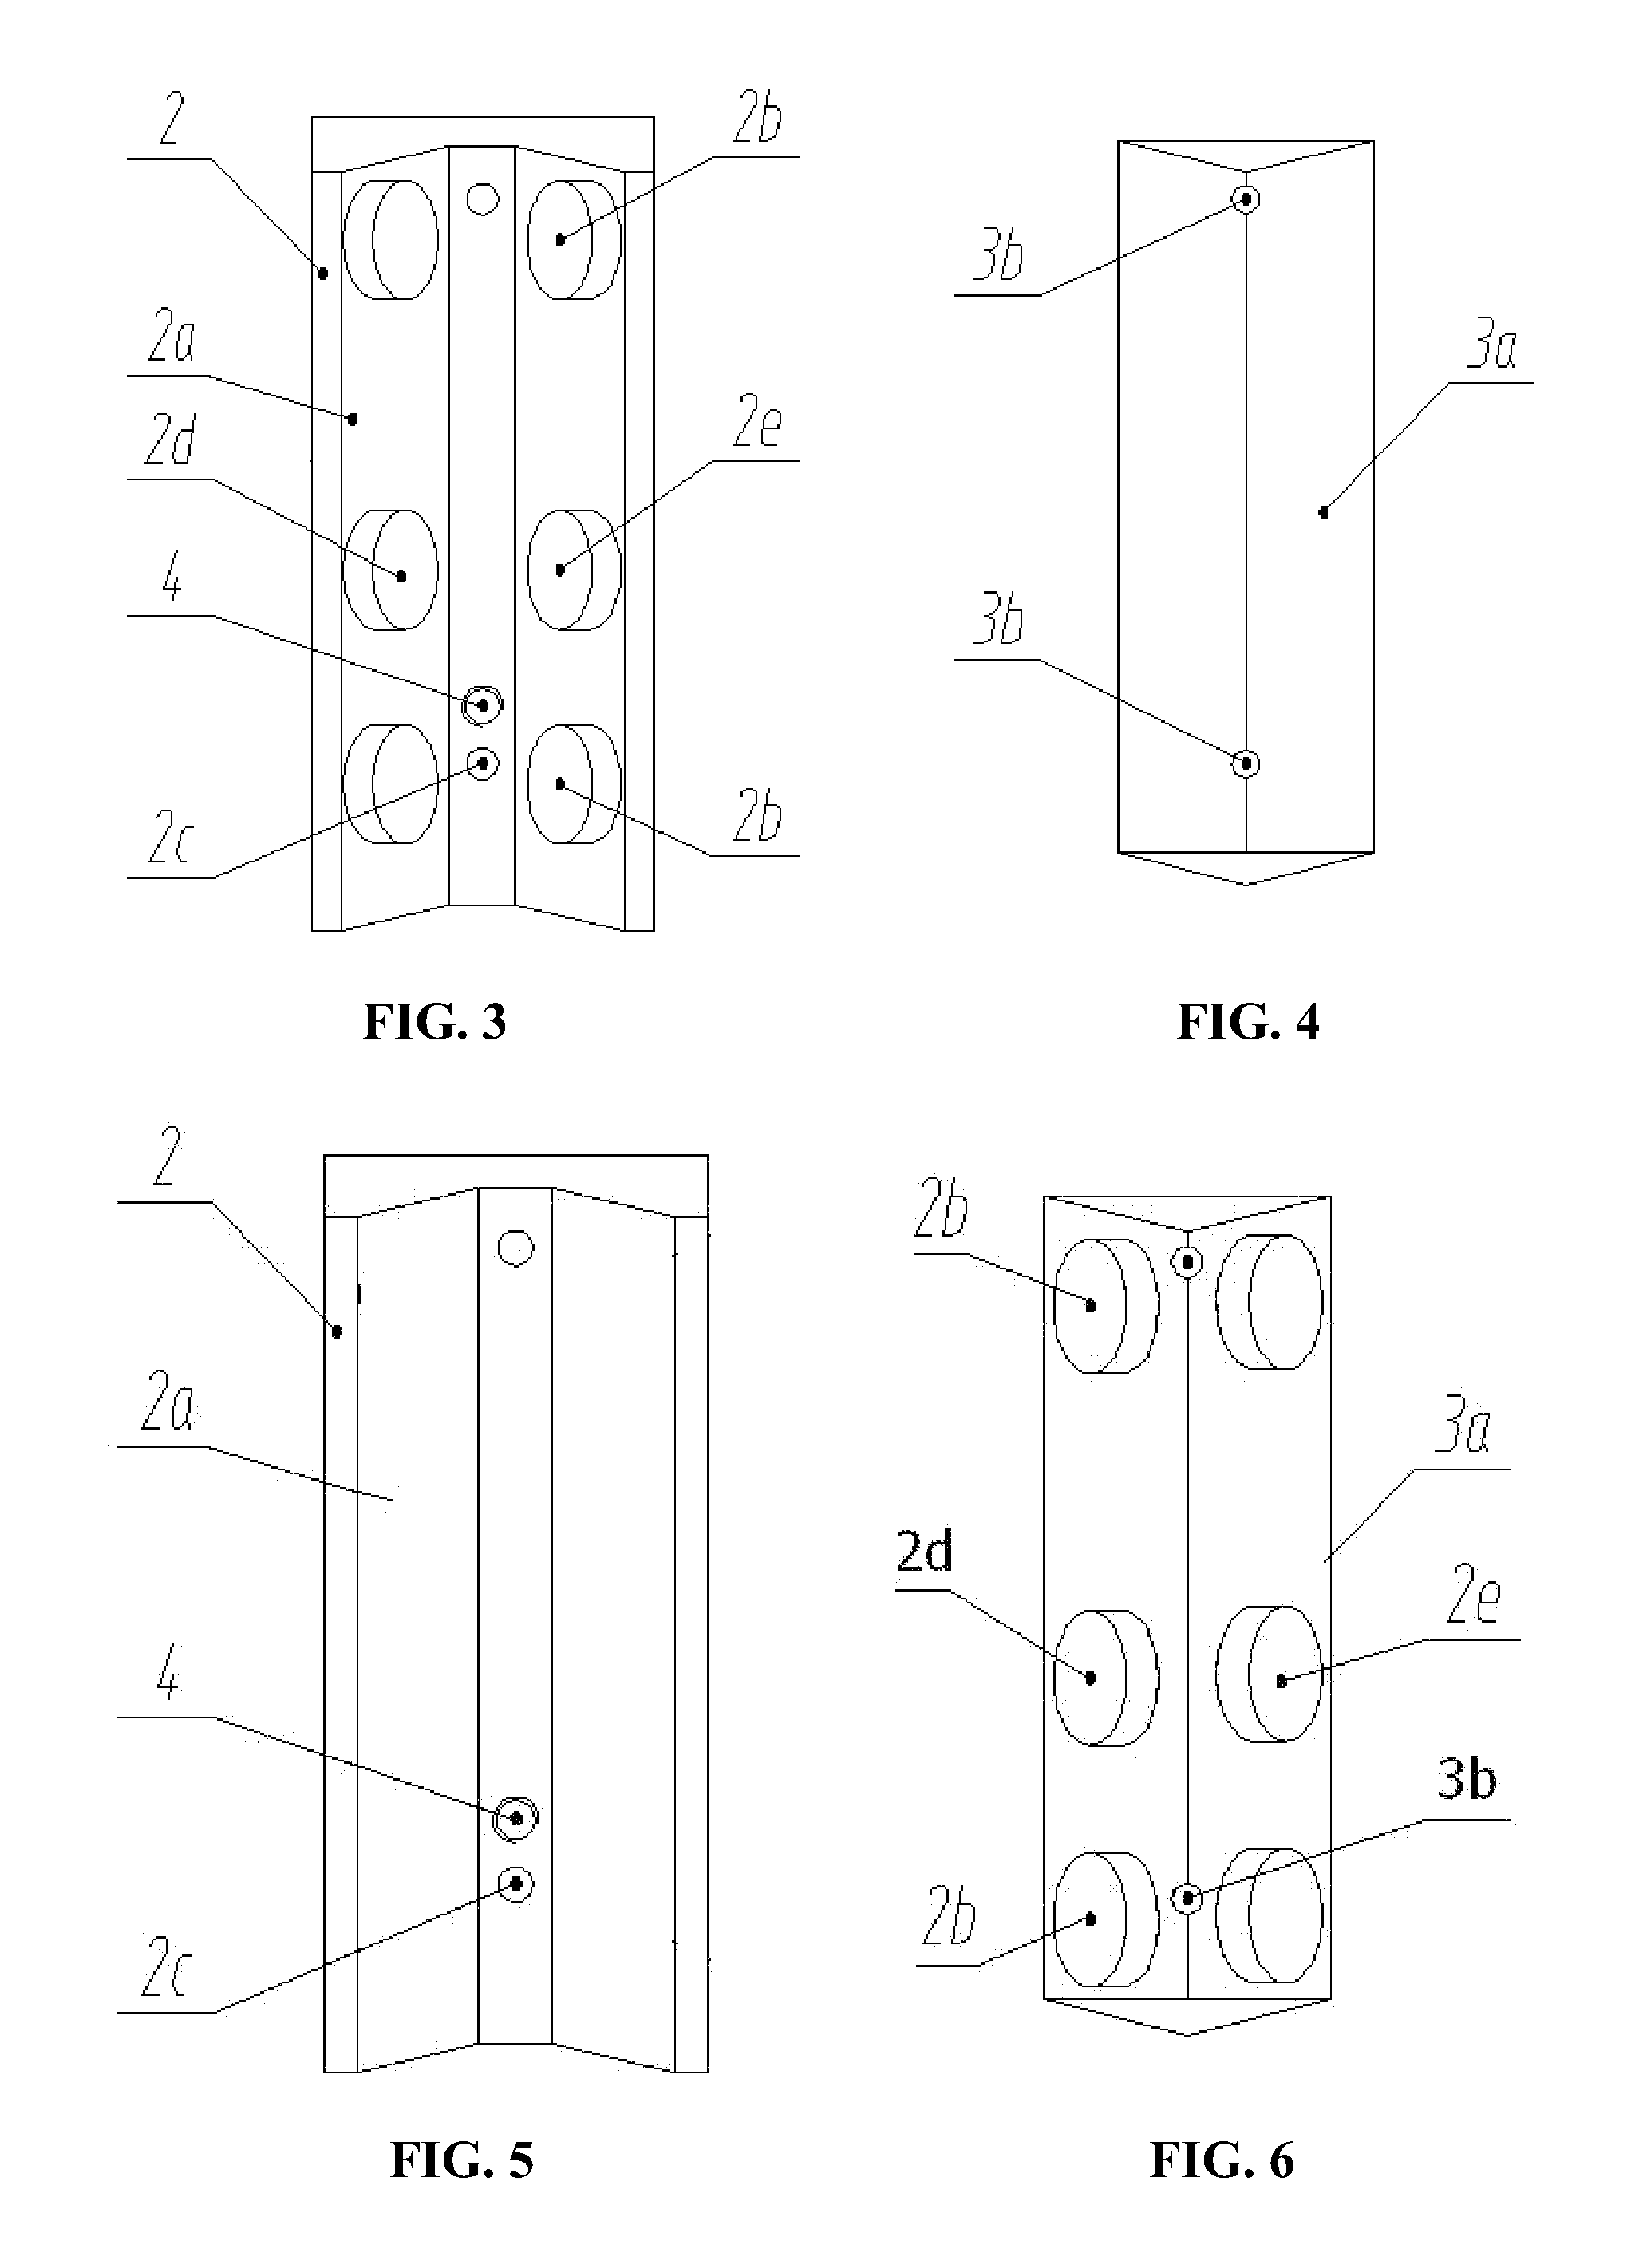 Anti-collision device for plasma vertical cutting gun